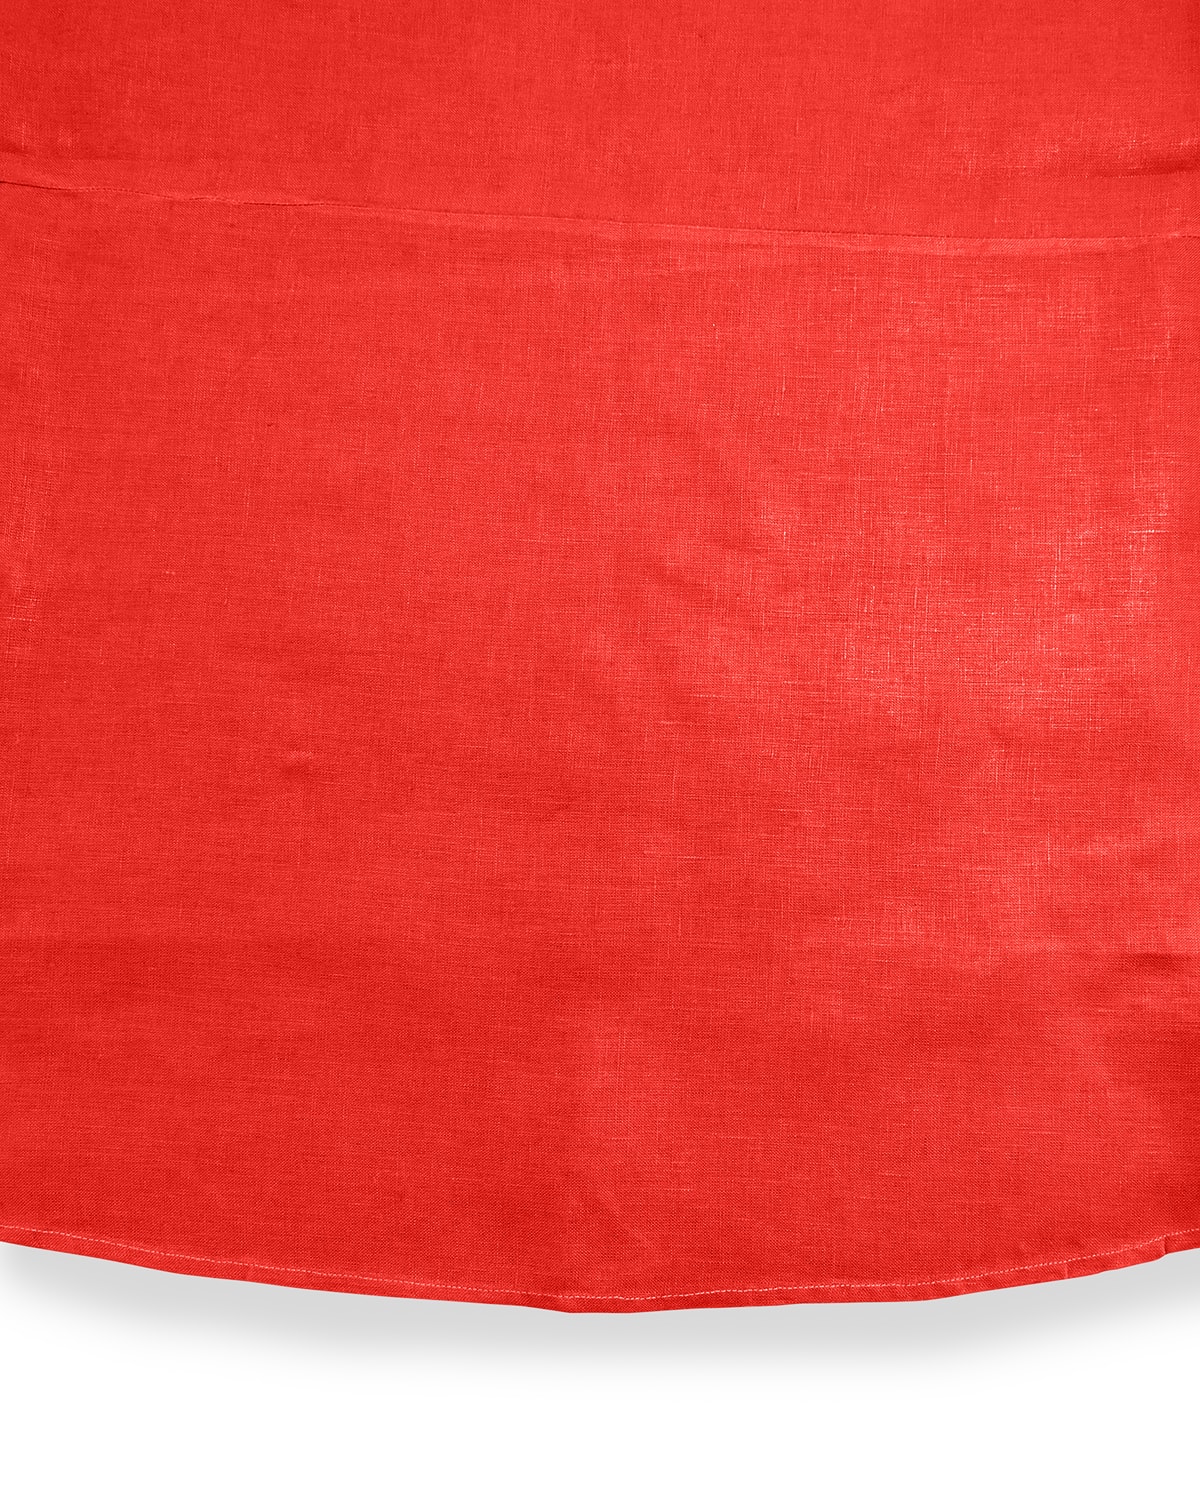 Shop Sferra Hemstitch Round Tablecloth, 90"dia. In Red